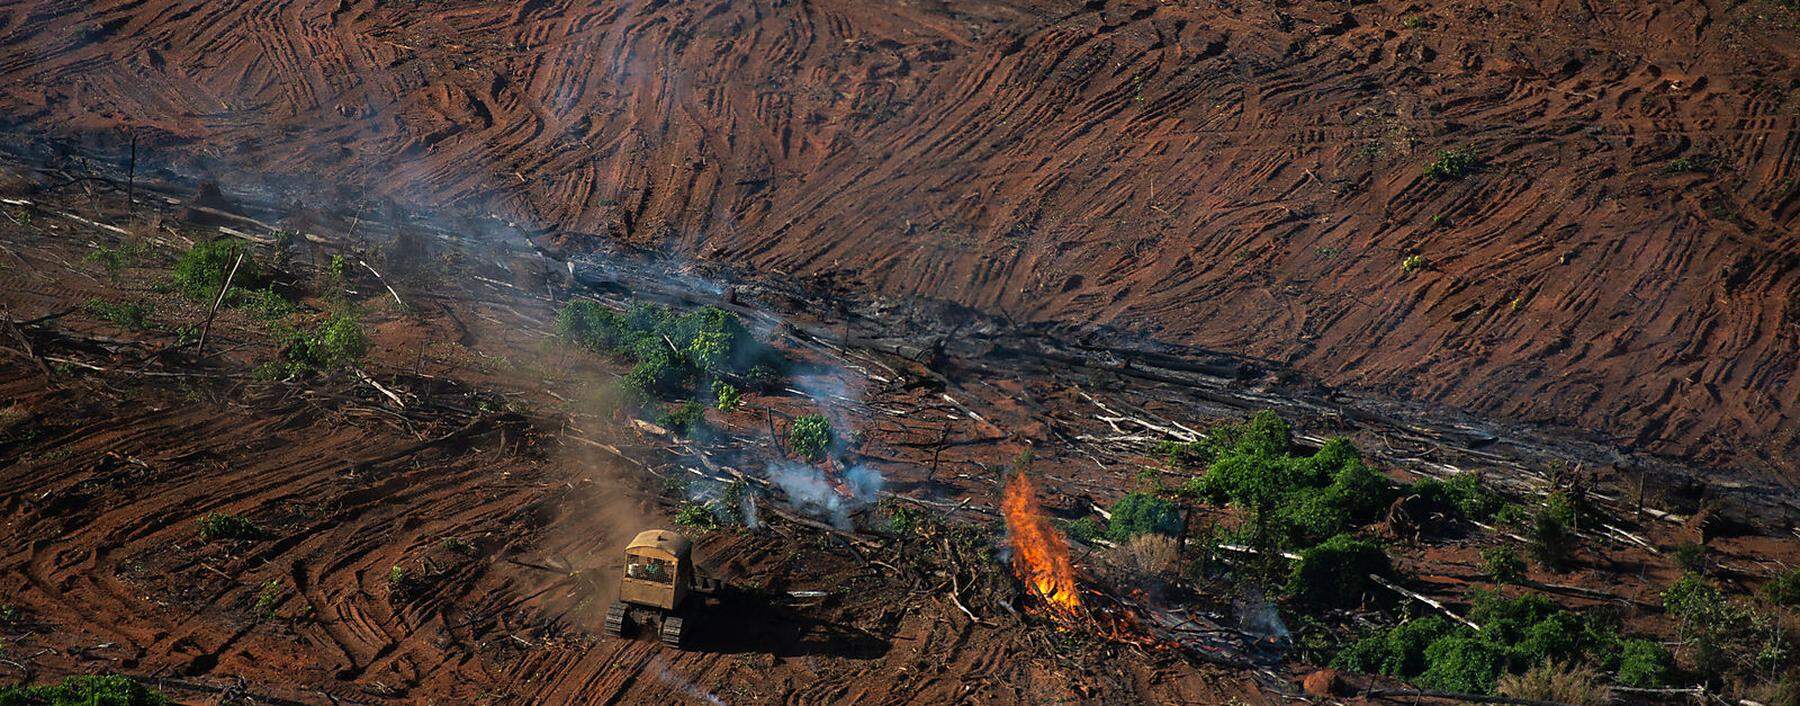 Deforestation and Fire Monitoring in the Amazon in July, 2020 Monitoramento de Desmatamento e Queimadas na Amazônia em Julho de 2020